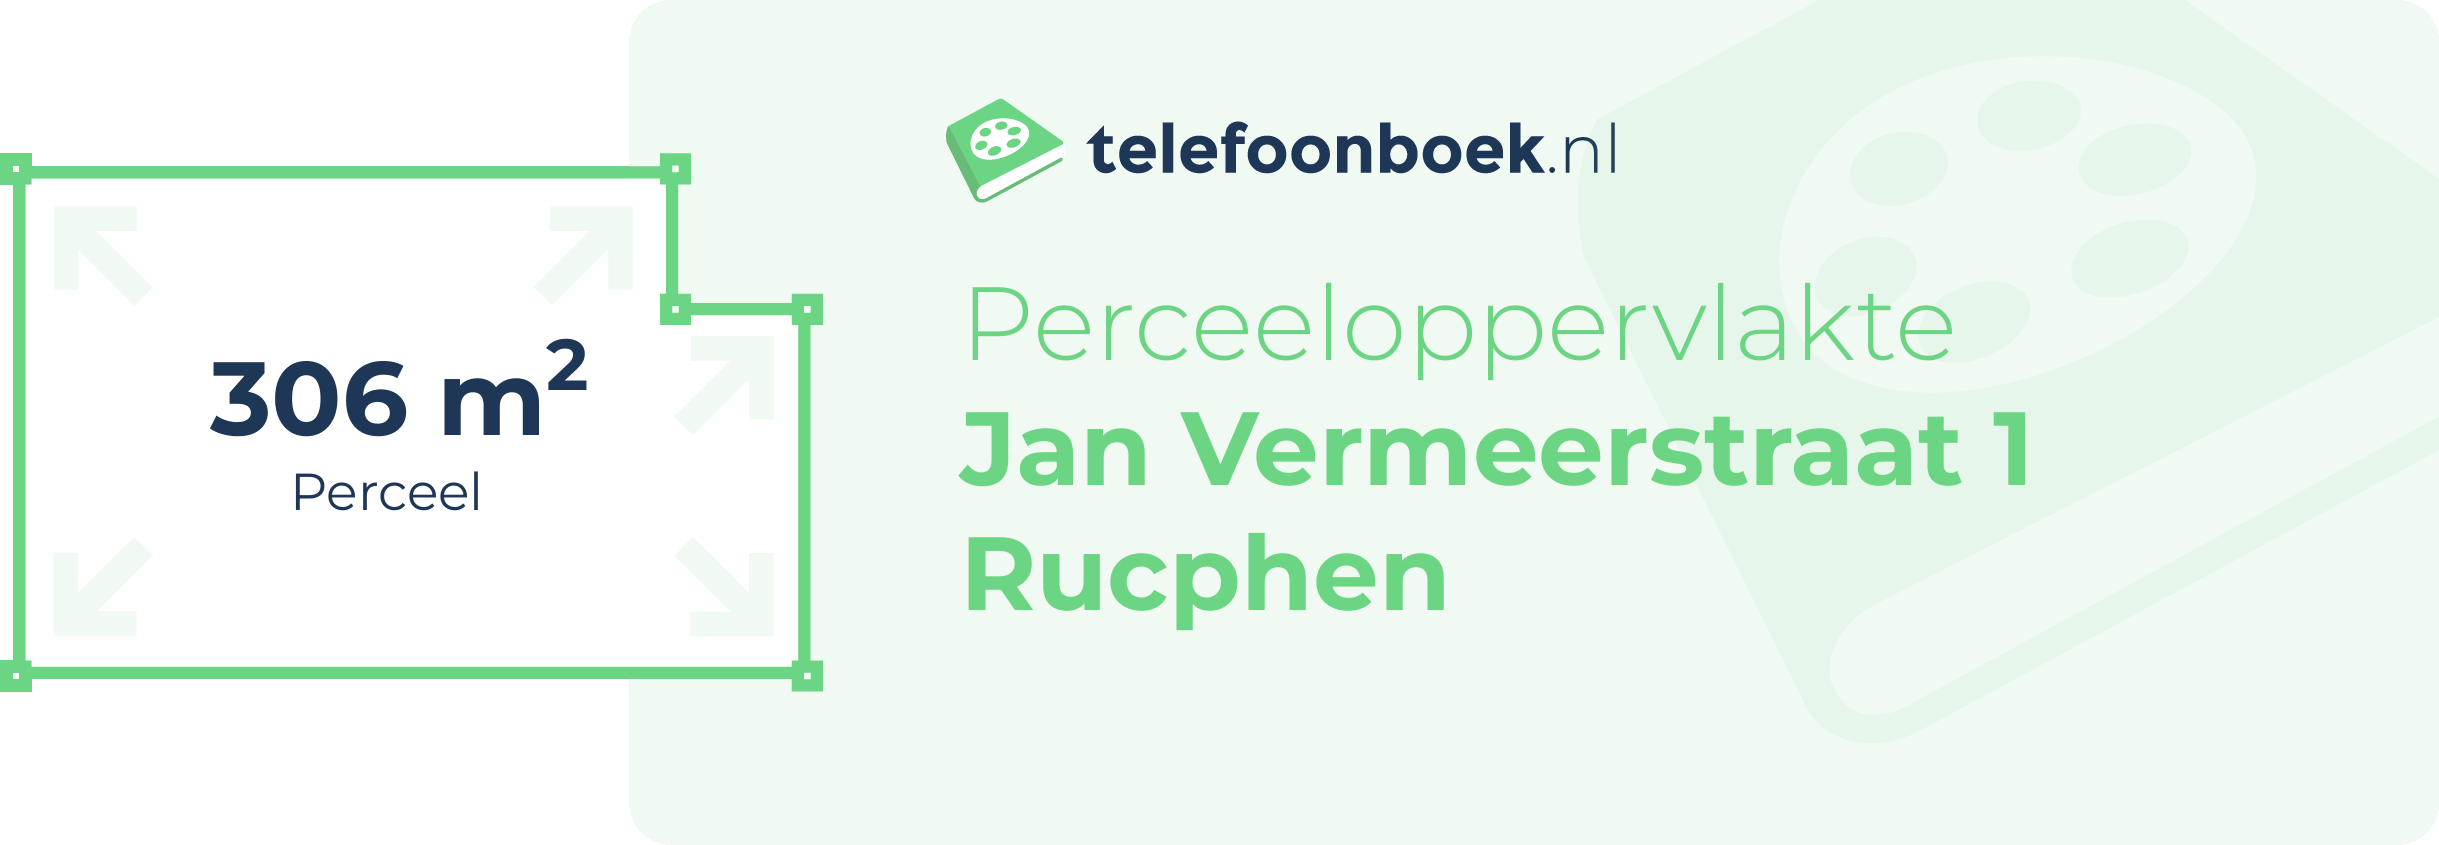 Perceeloppervlakte Jan Vermeerstraat 1 Rucphen